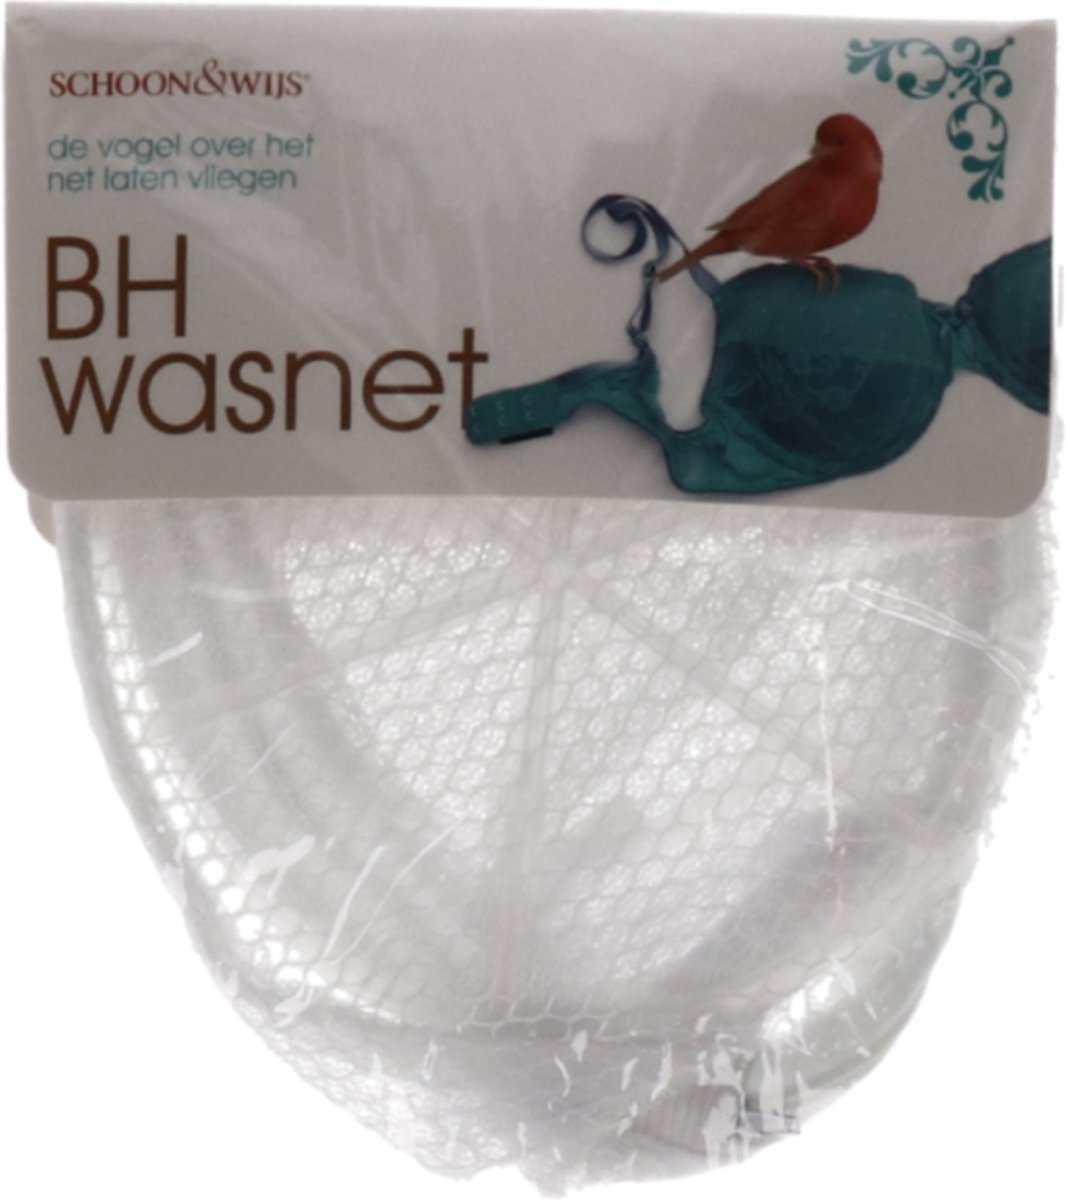 BH Wasnet - Wasnet - BH - Wassen - Wasmachine - Fijne was - Waszak - Kleding - Bescherming - Tegen gaatjes - Bescherming voor uw kleding - Waszak voor BH - Waszak met stevige rand - 37x27 - Wit.